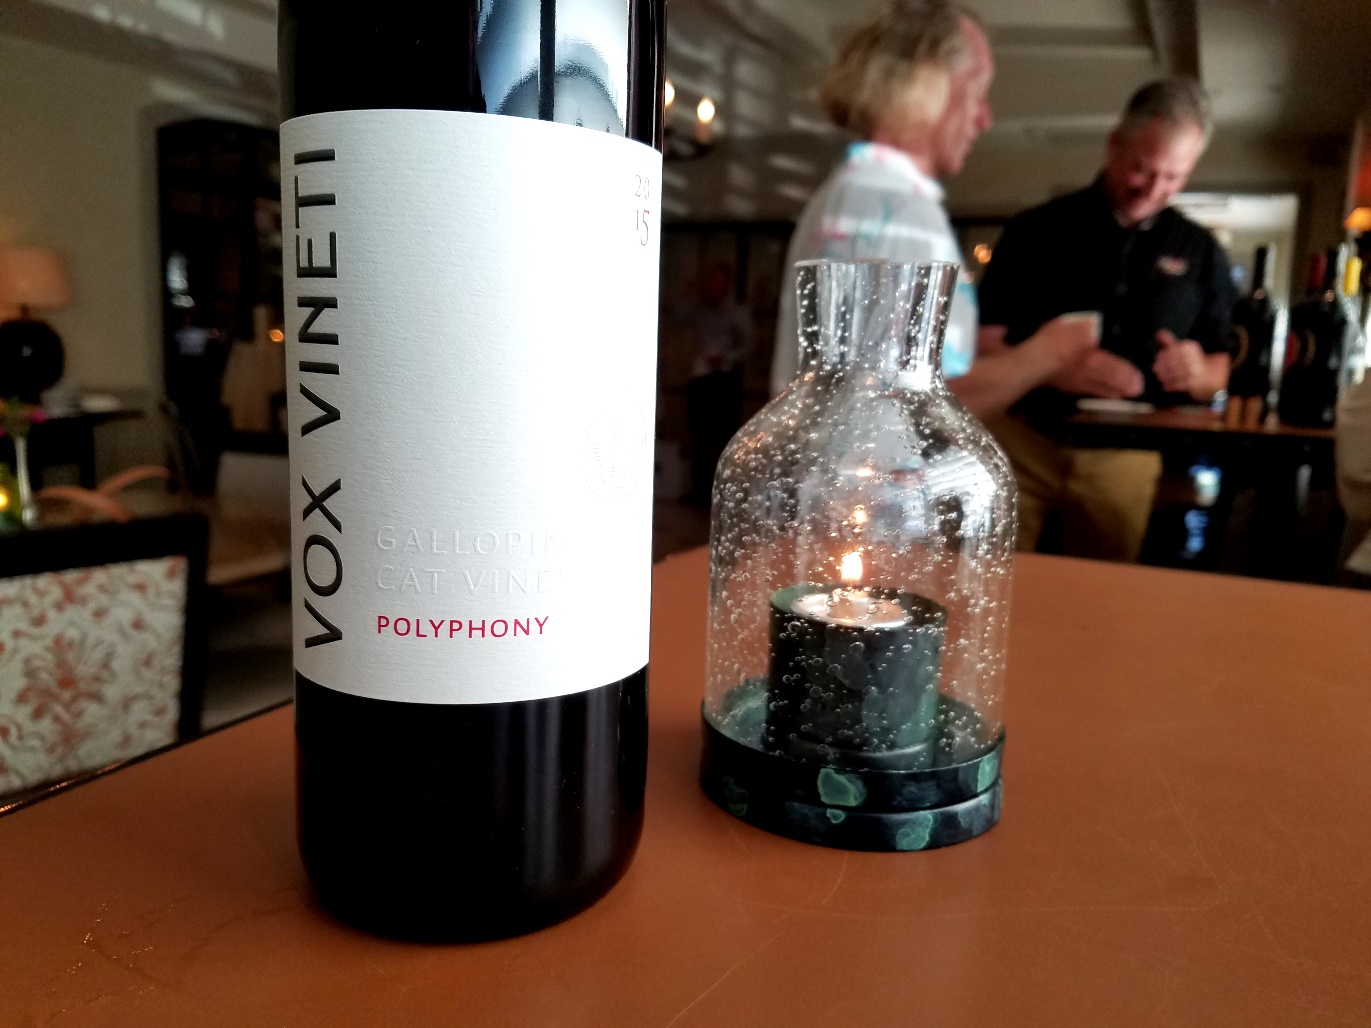 Vox Vineti, Polyphony 2015, Galloping Cat Vineyard, Pennsylvania, Wine Casual